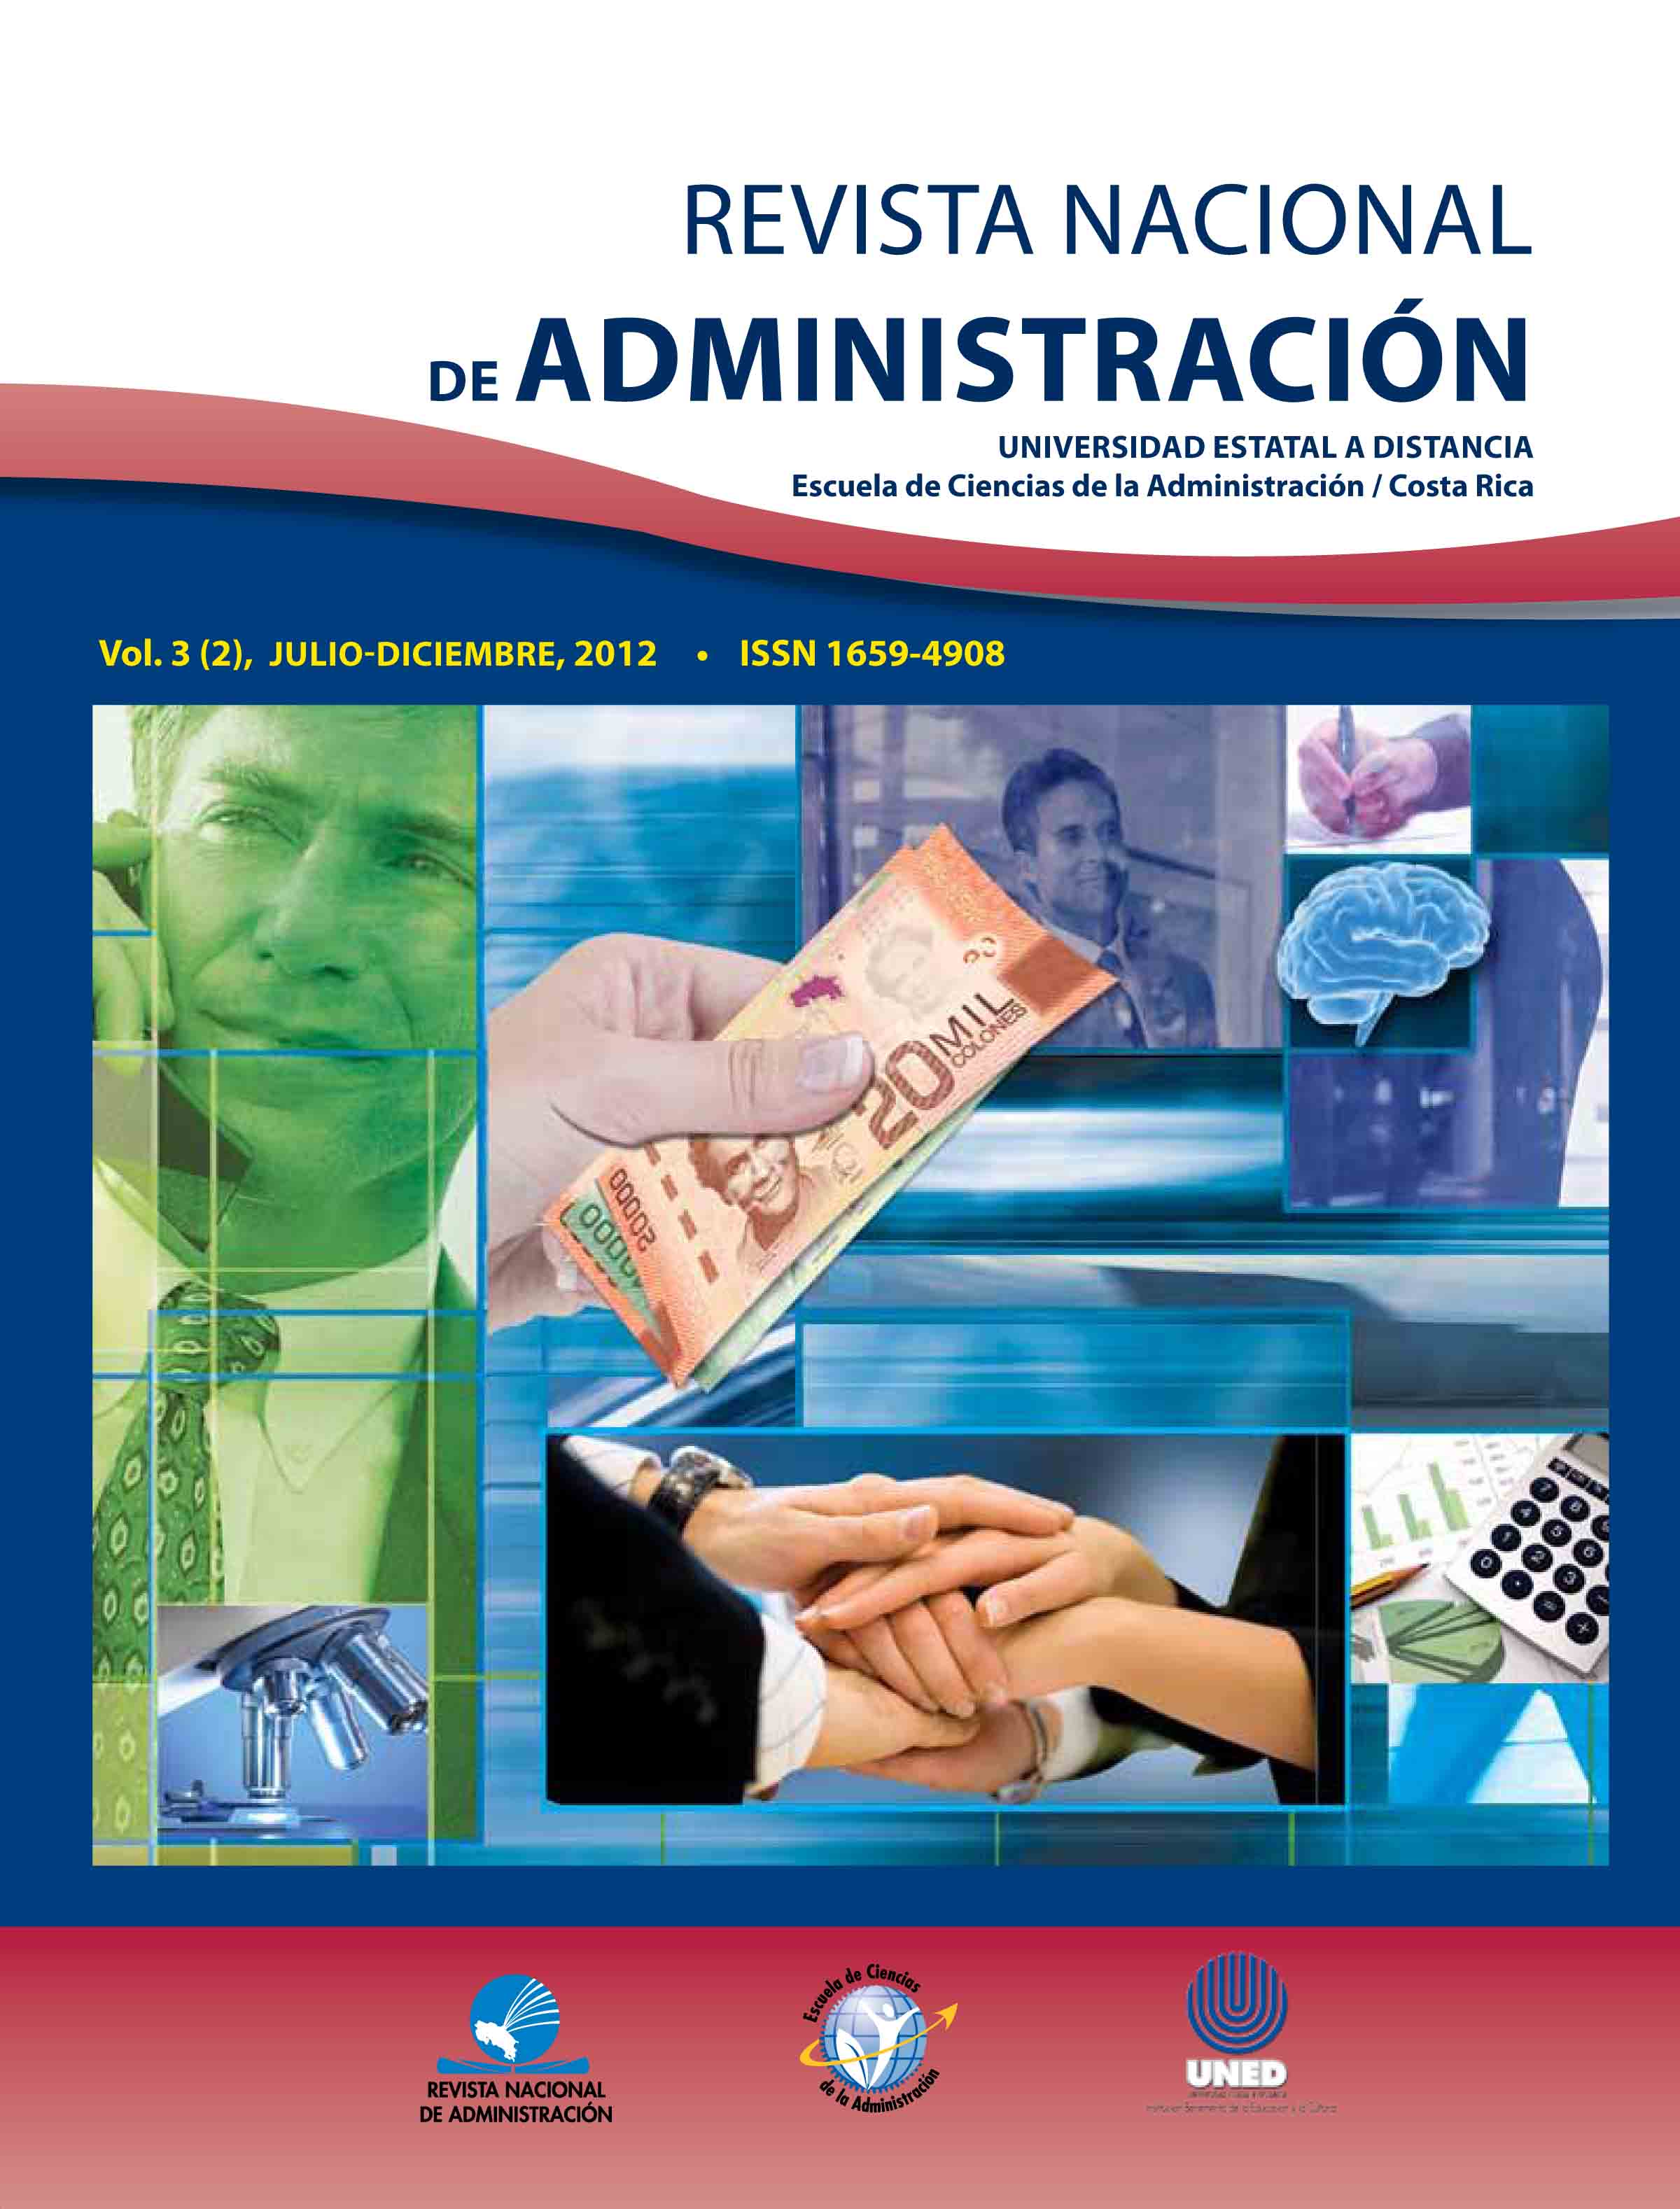 					Ver Vol. 3 Núm. 2 (2012): Revista Nacional de Administración
				